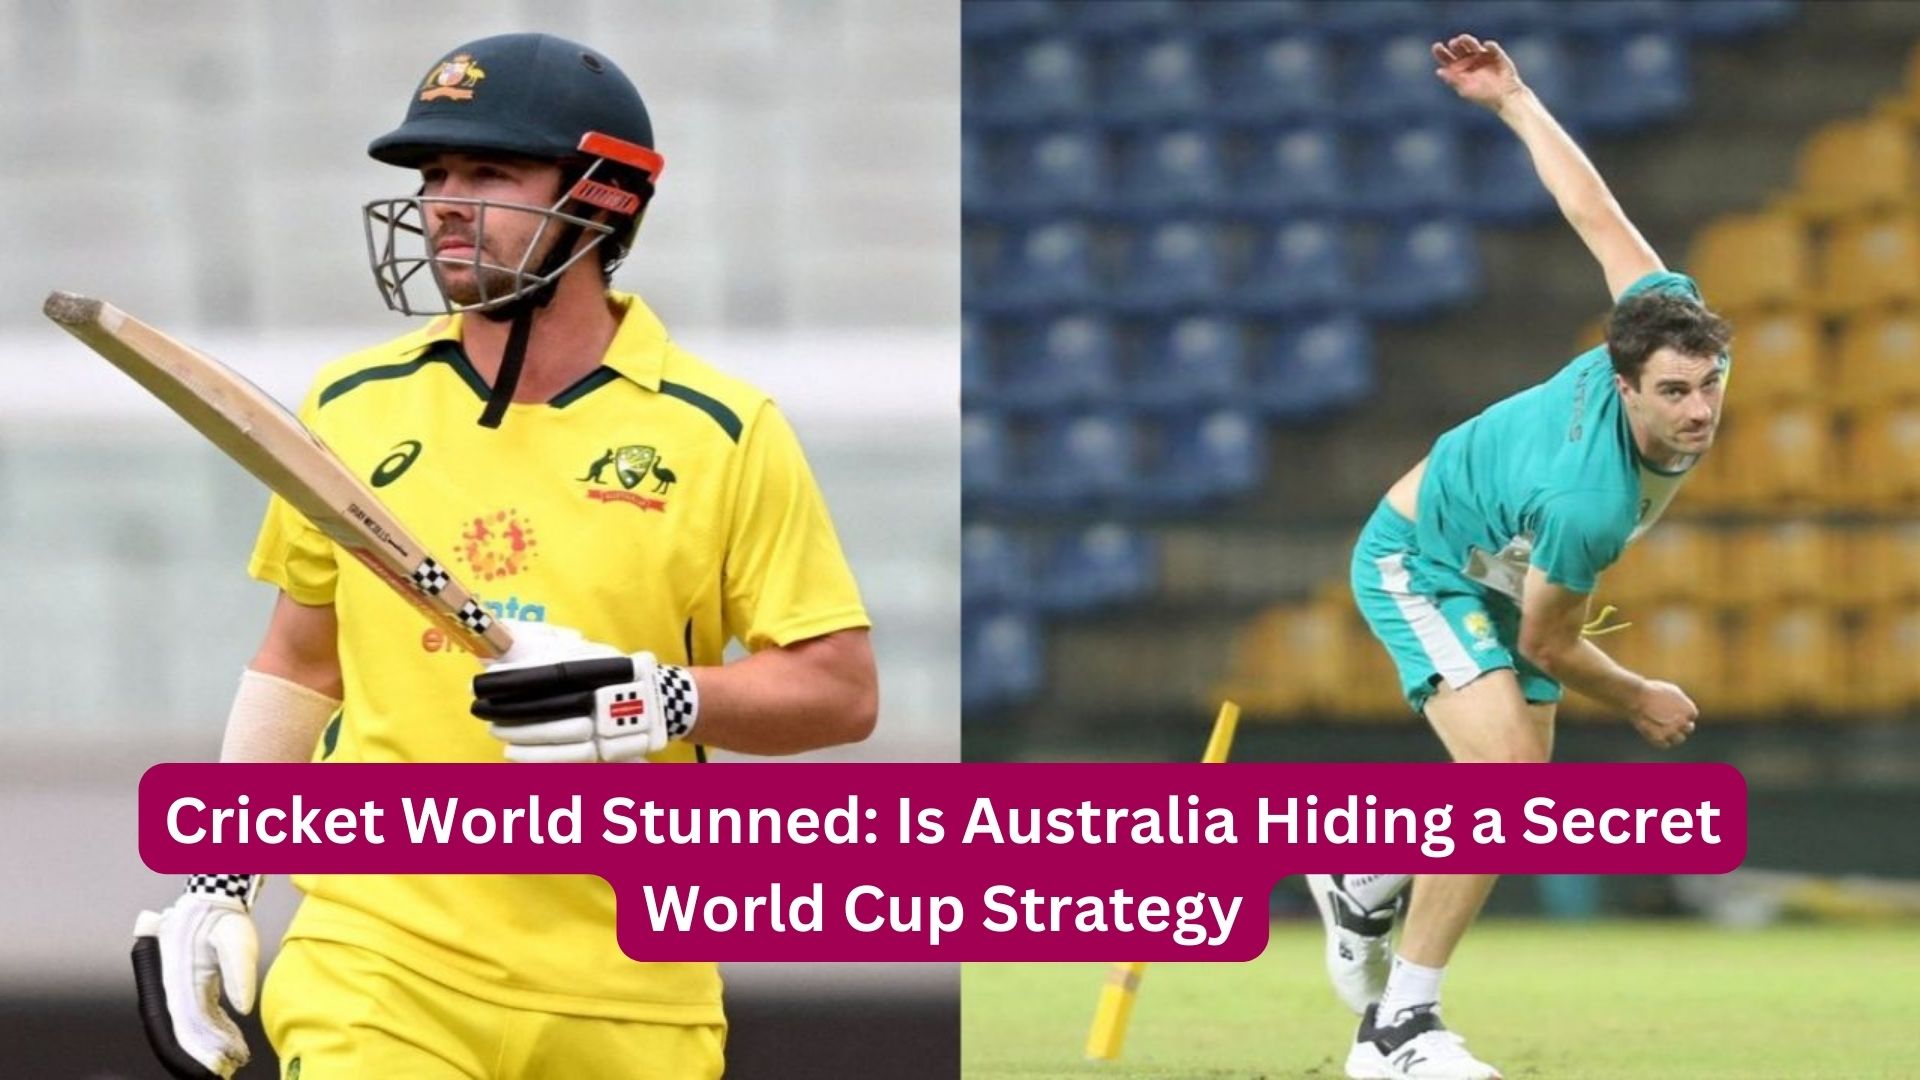 Cricket World Stunned: Is Australia Hiding a Secret World Cup Strategy